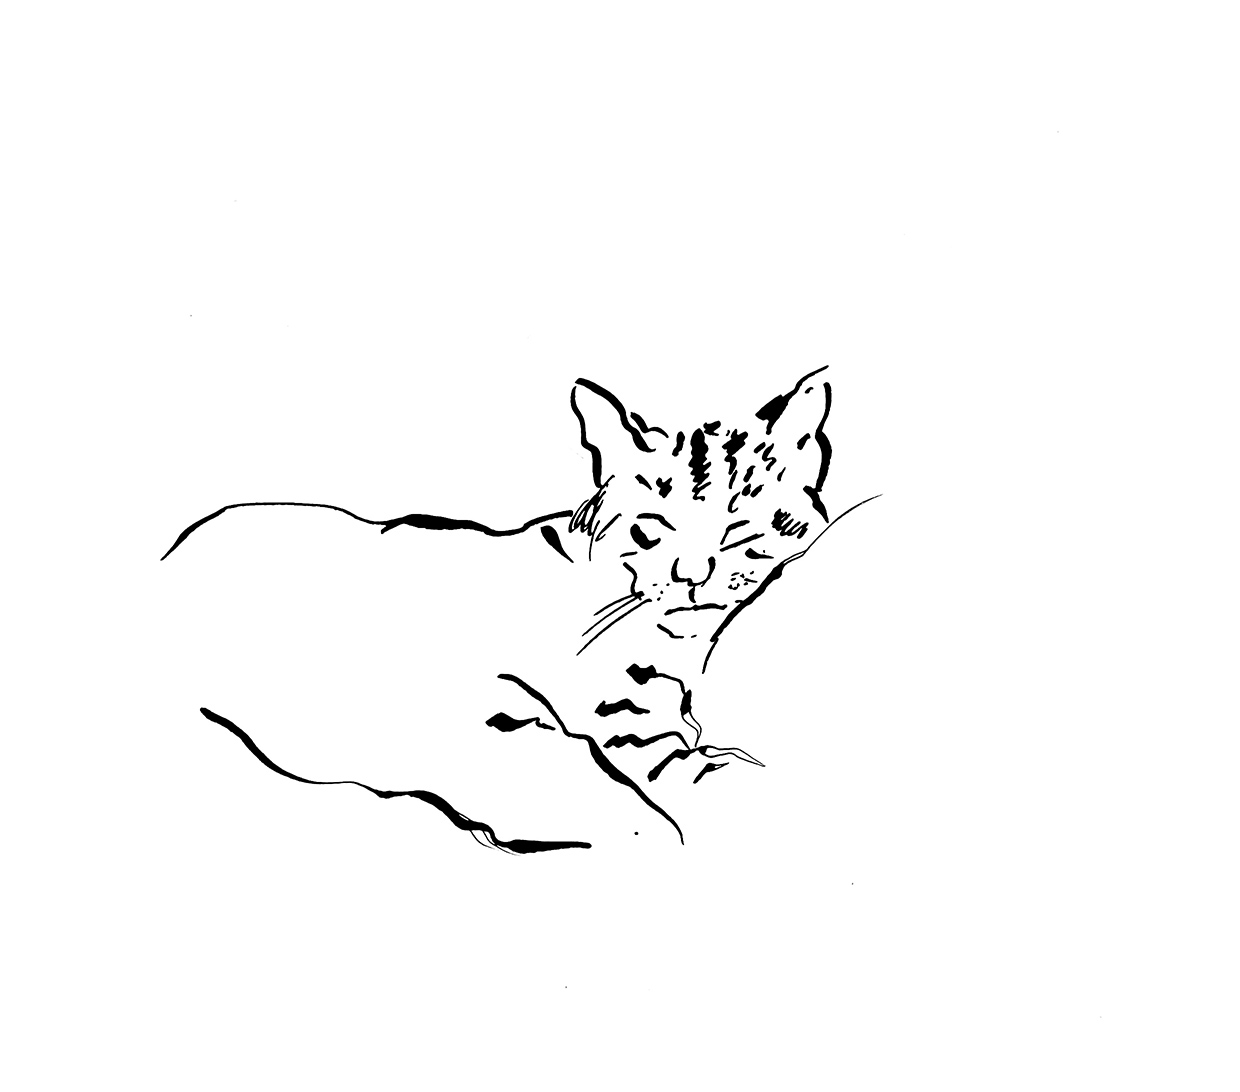 pentekening van kat